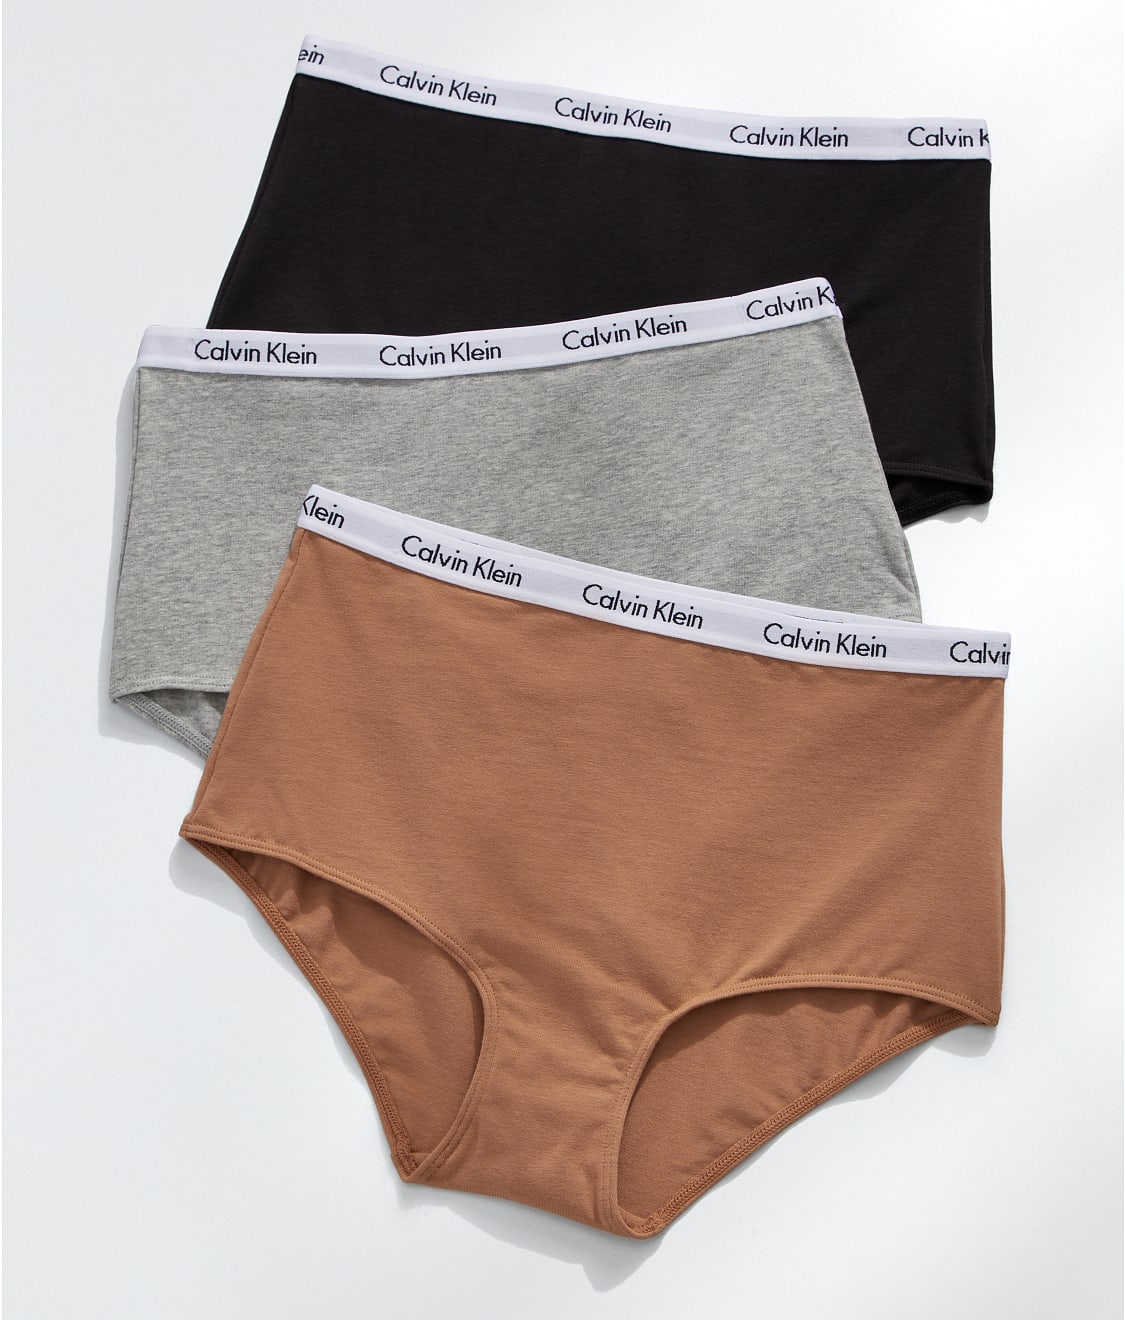 Calvin Klein Underwear Women's Carousel 3 Pack Panties, Multi, Small 